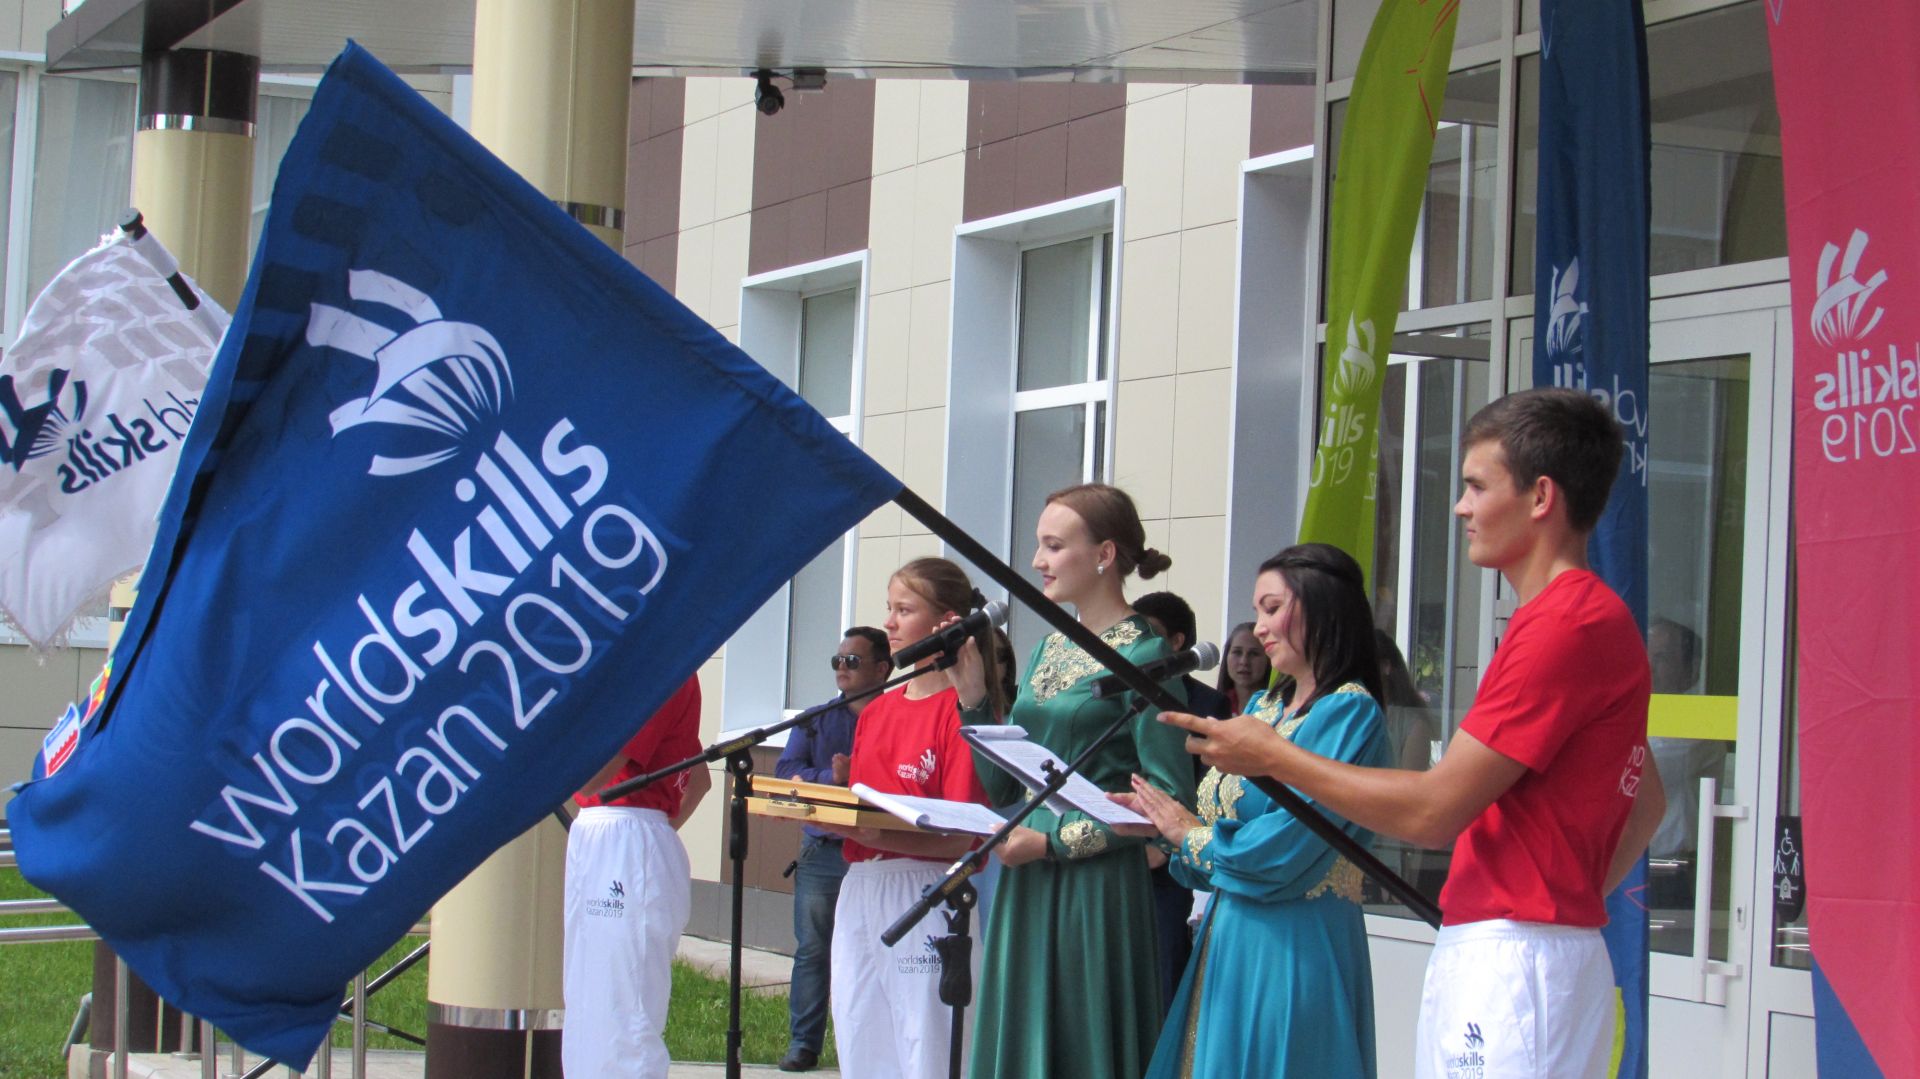 Әтнә  WorldSkills һәм WorldSkills Kazan 2019 әләмнәрен кабул итте - фоторепортаж